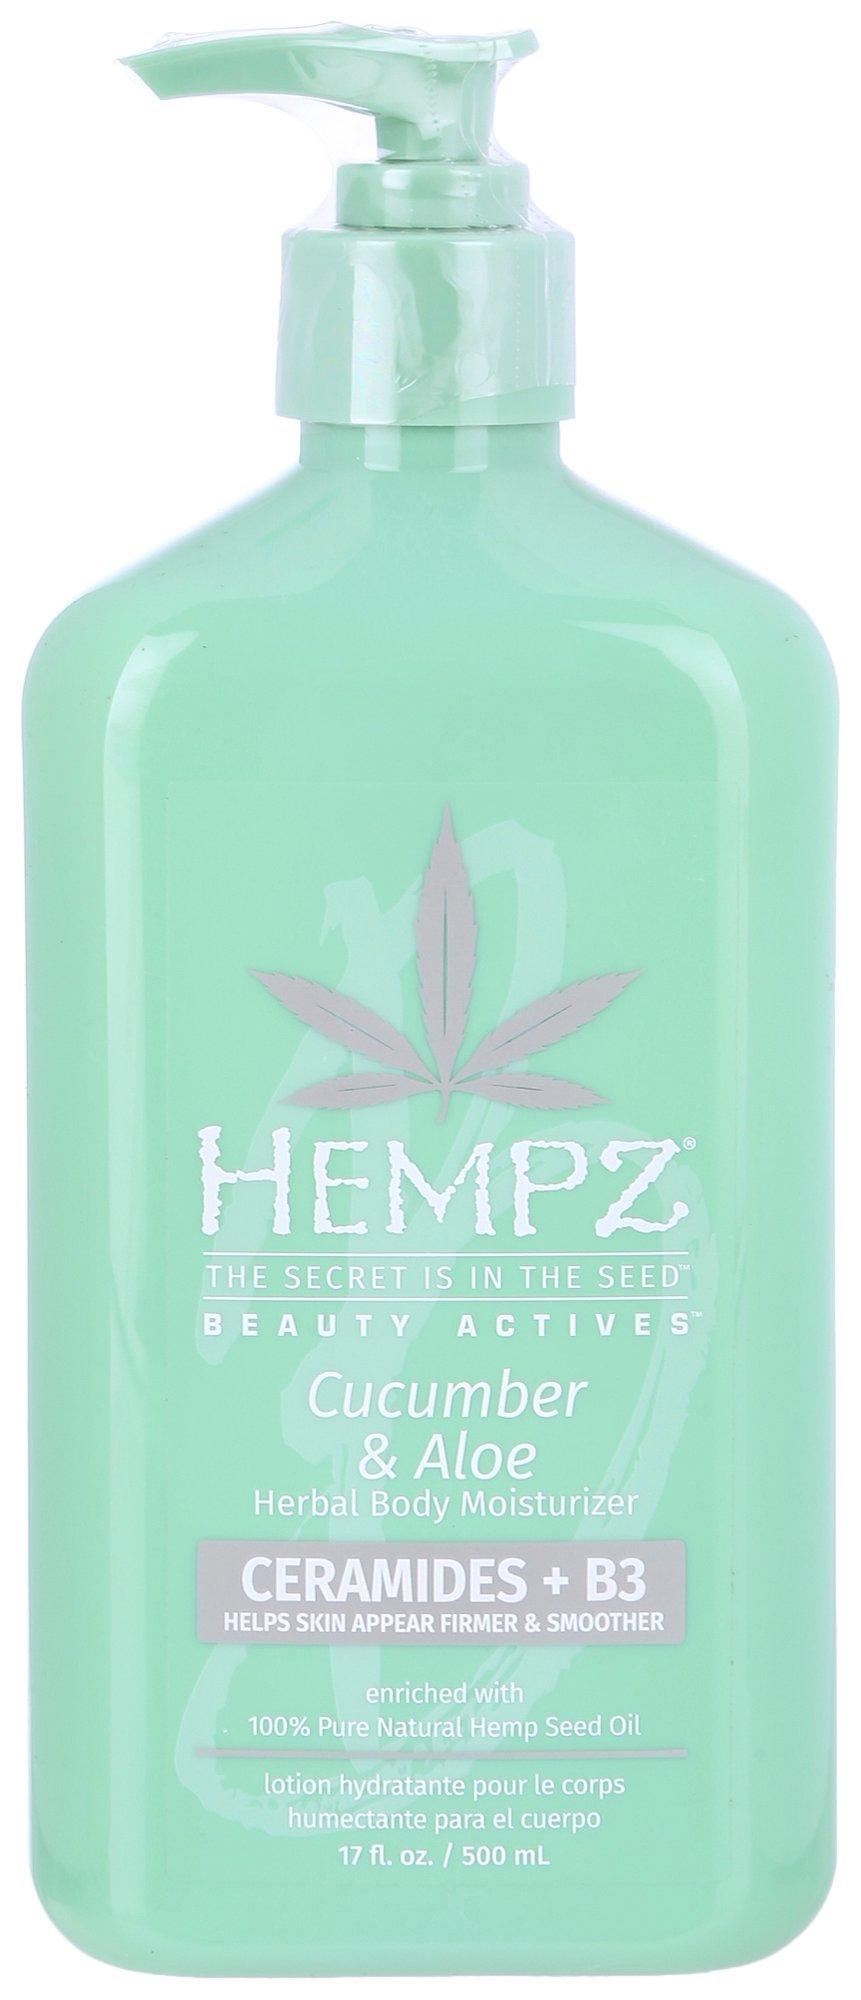 Hempz 17 Fl.Oz. Cucumber & Aloe Body Moisturizer